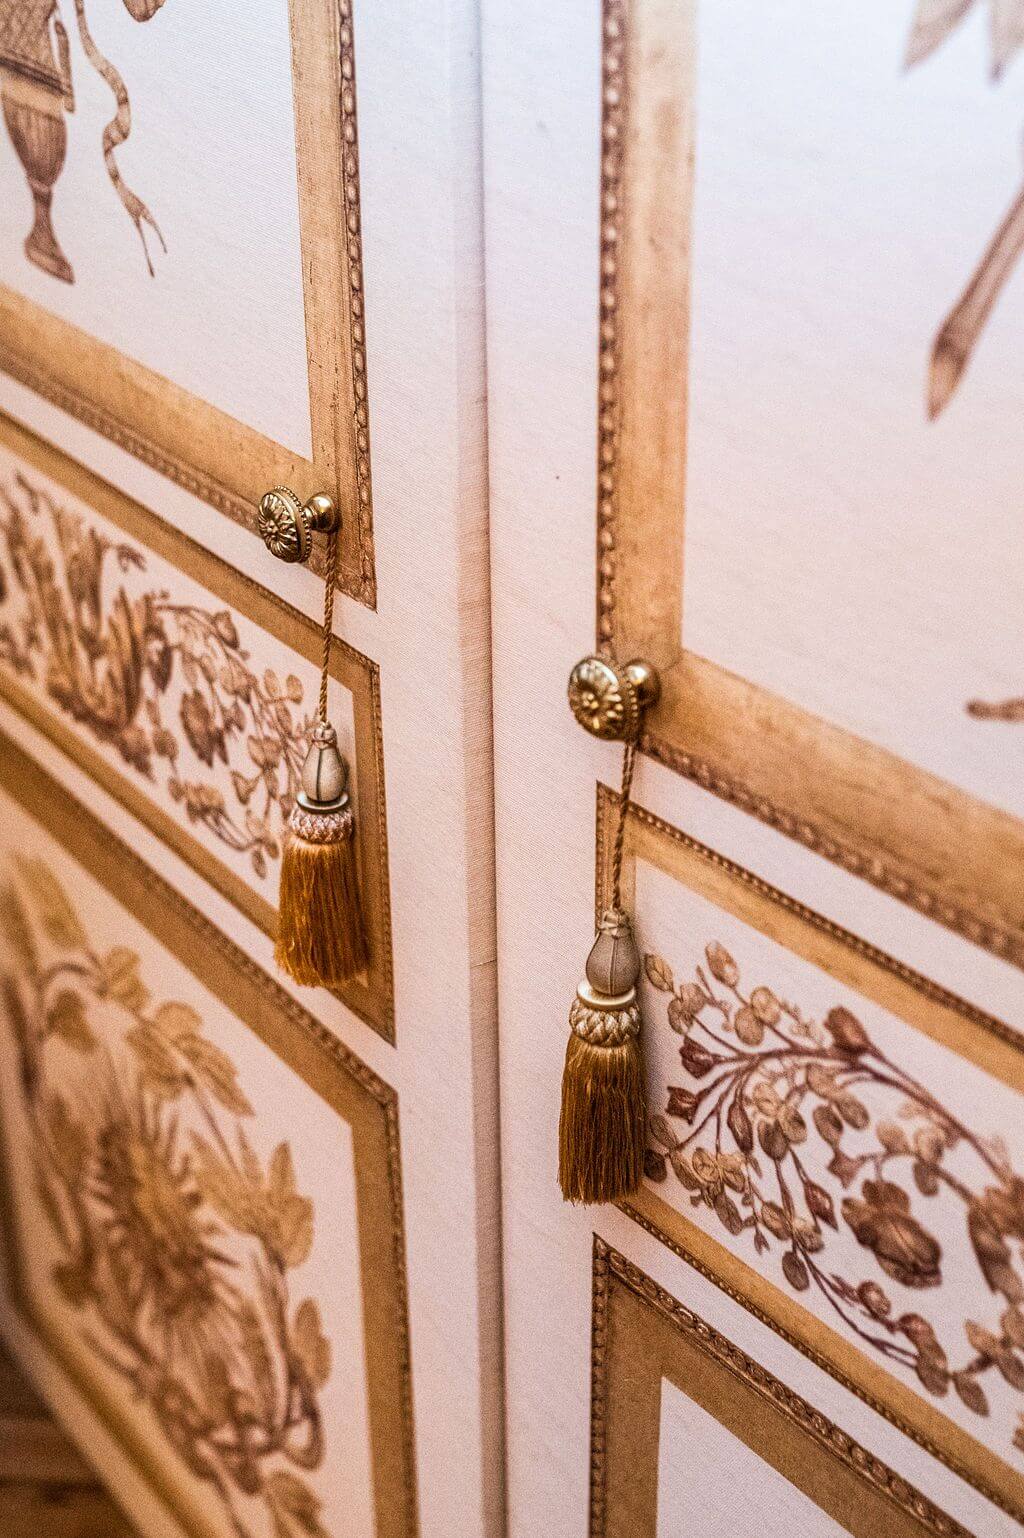 Doors and Tassels in the Paris Apartment of Timothy Corrigan